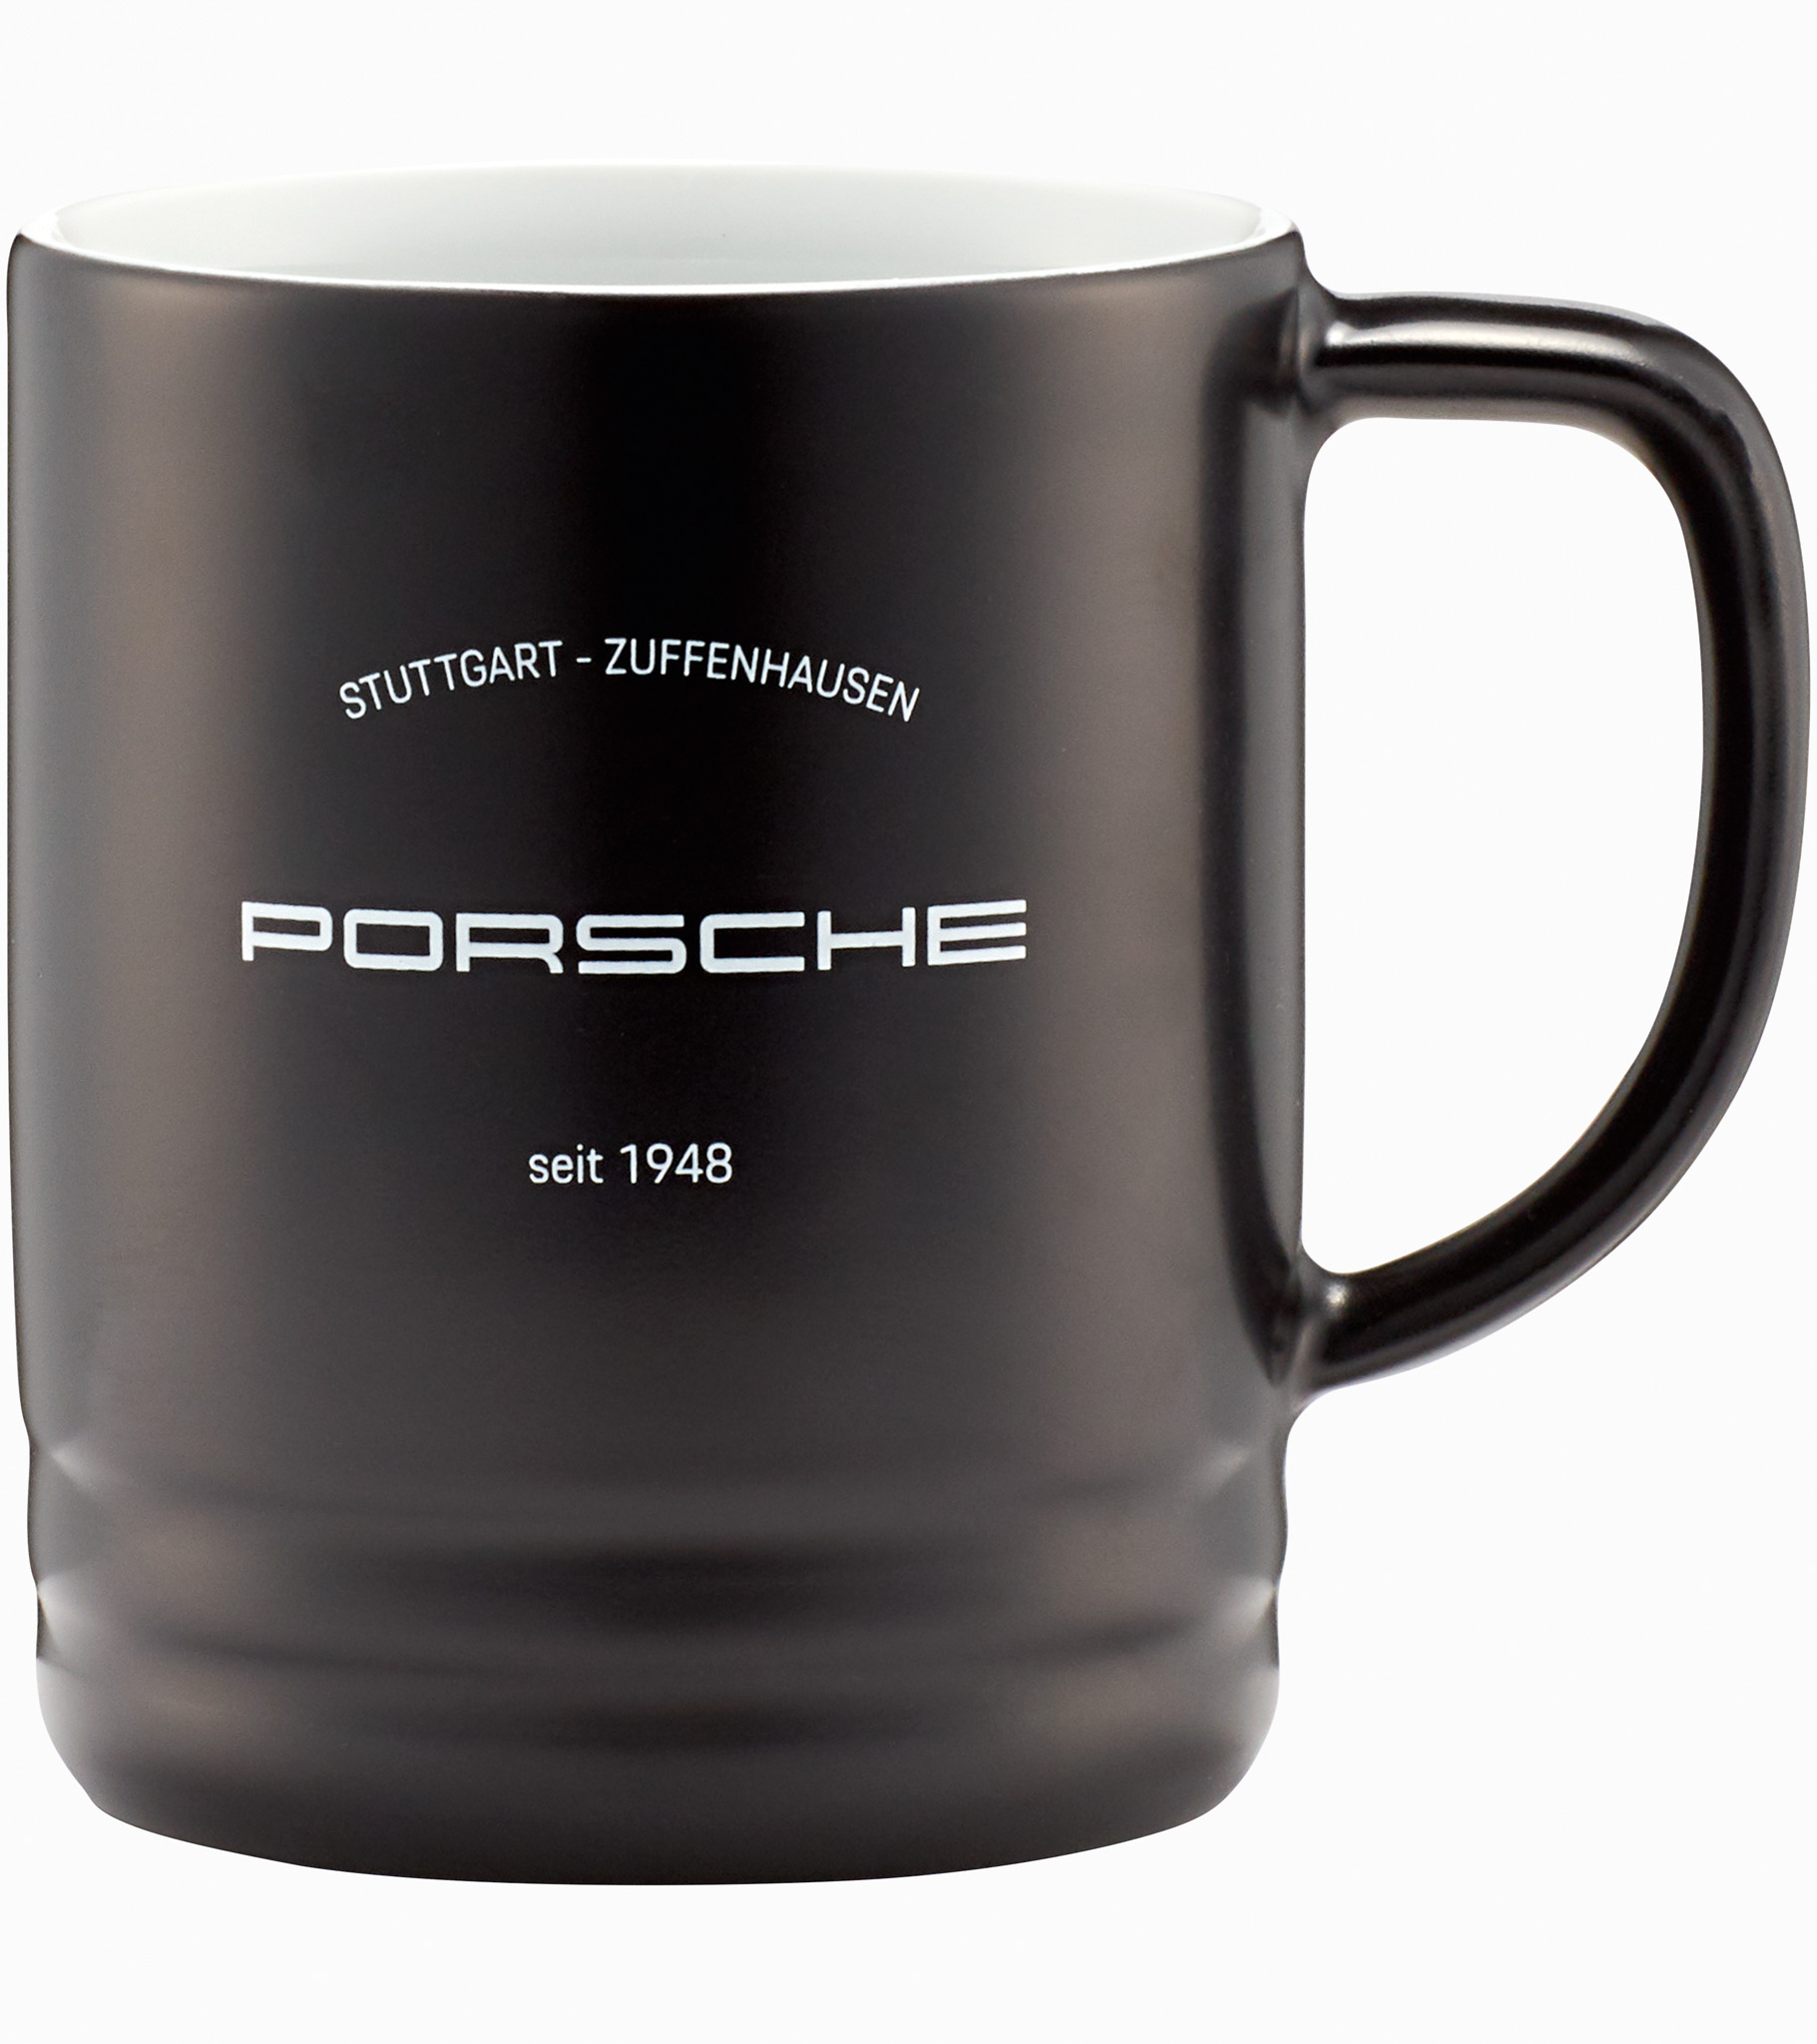 Porsche Classic Cup, Large zoom